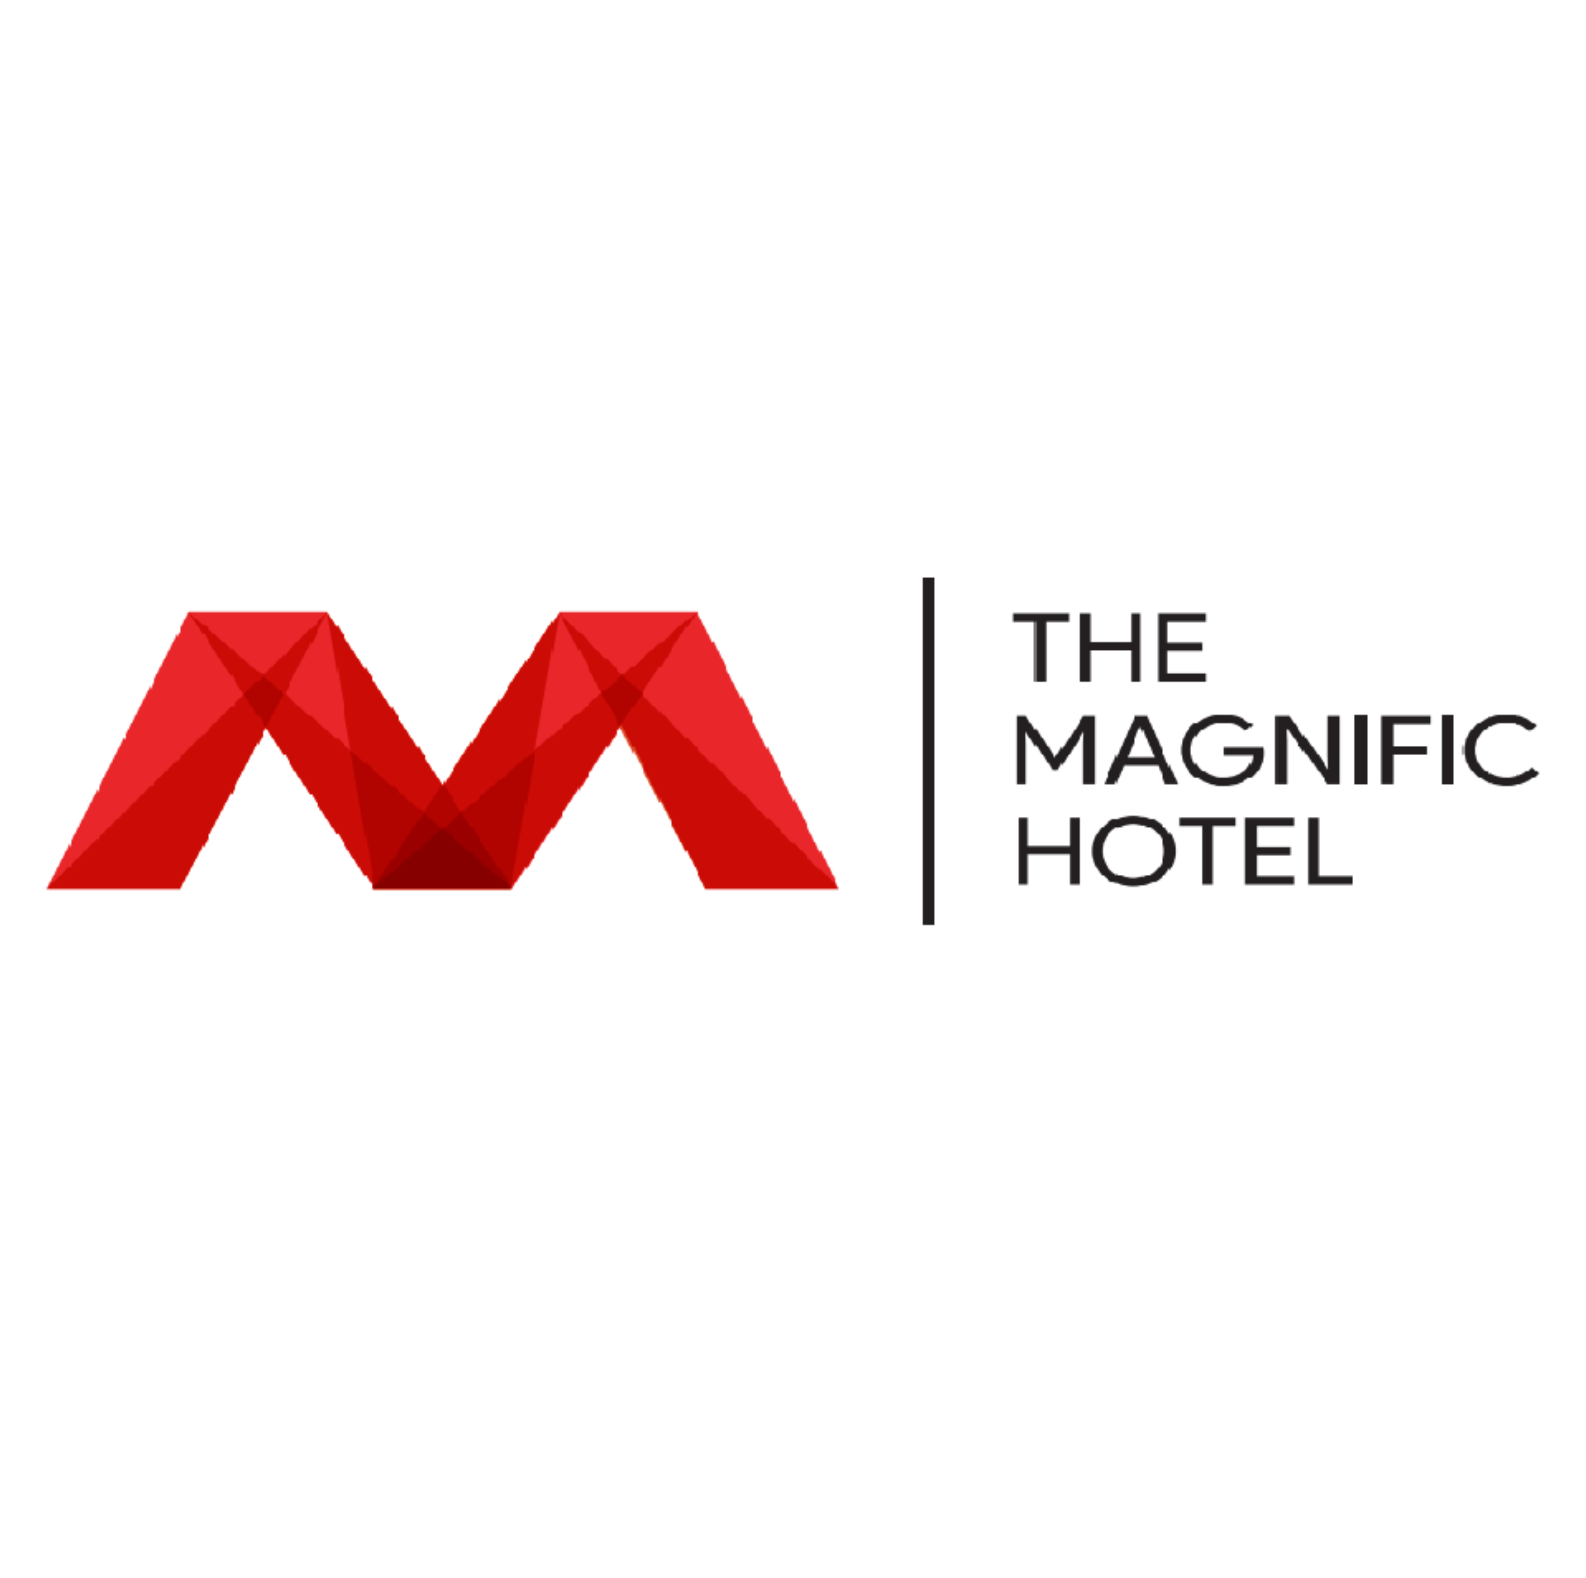 THE MAGNIFIC HOTEL